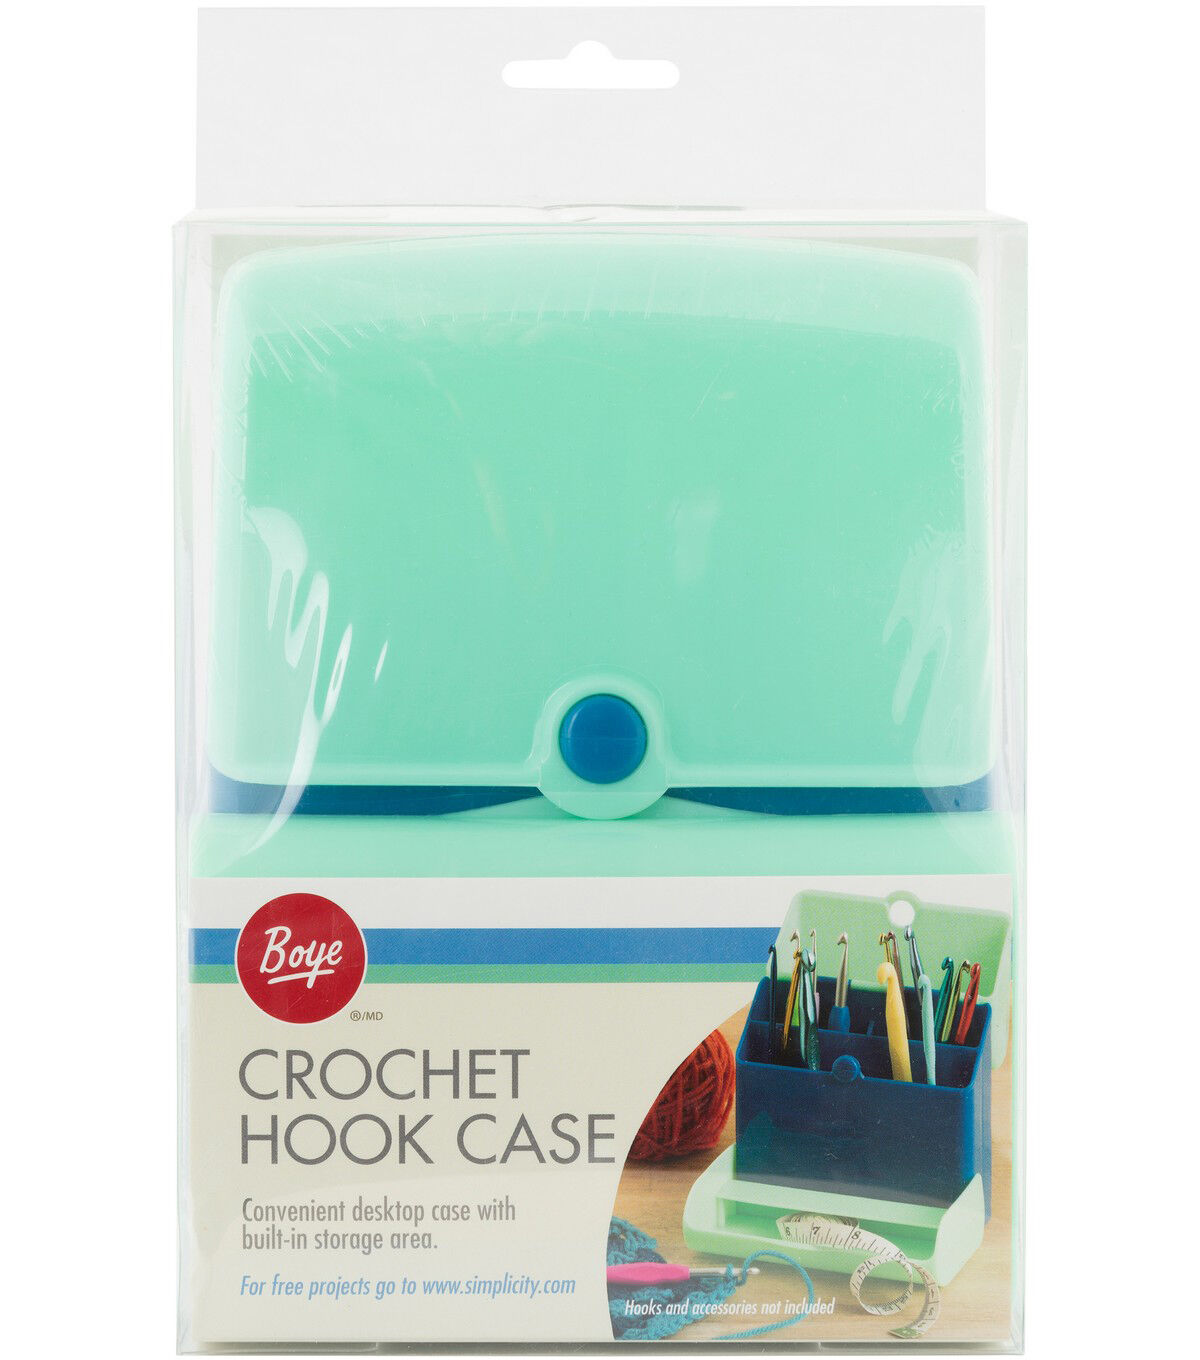 YARWO Crochet Hook Case, Travel Organizer Bag for Crochet Hooks, Aluminum  Crochet Hooks, and Crochet Supplies, Teal (Bag Only)